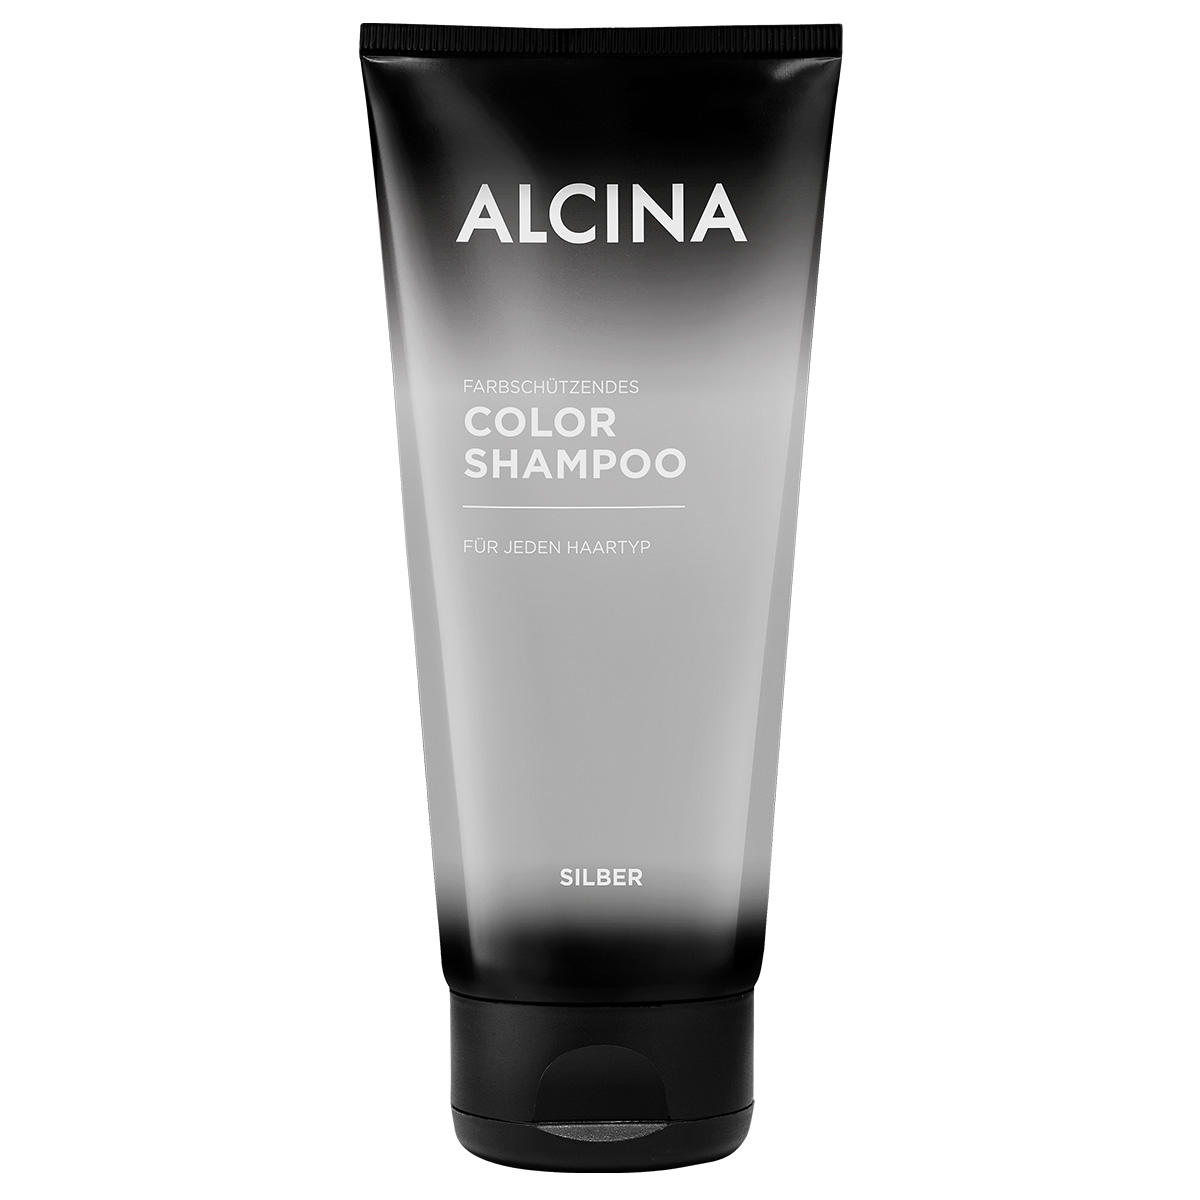 Alcina Color Shampoo Silber, 200 ml - 1